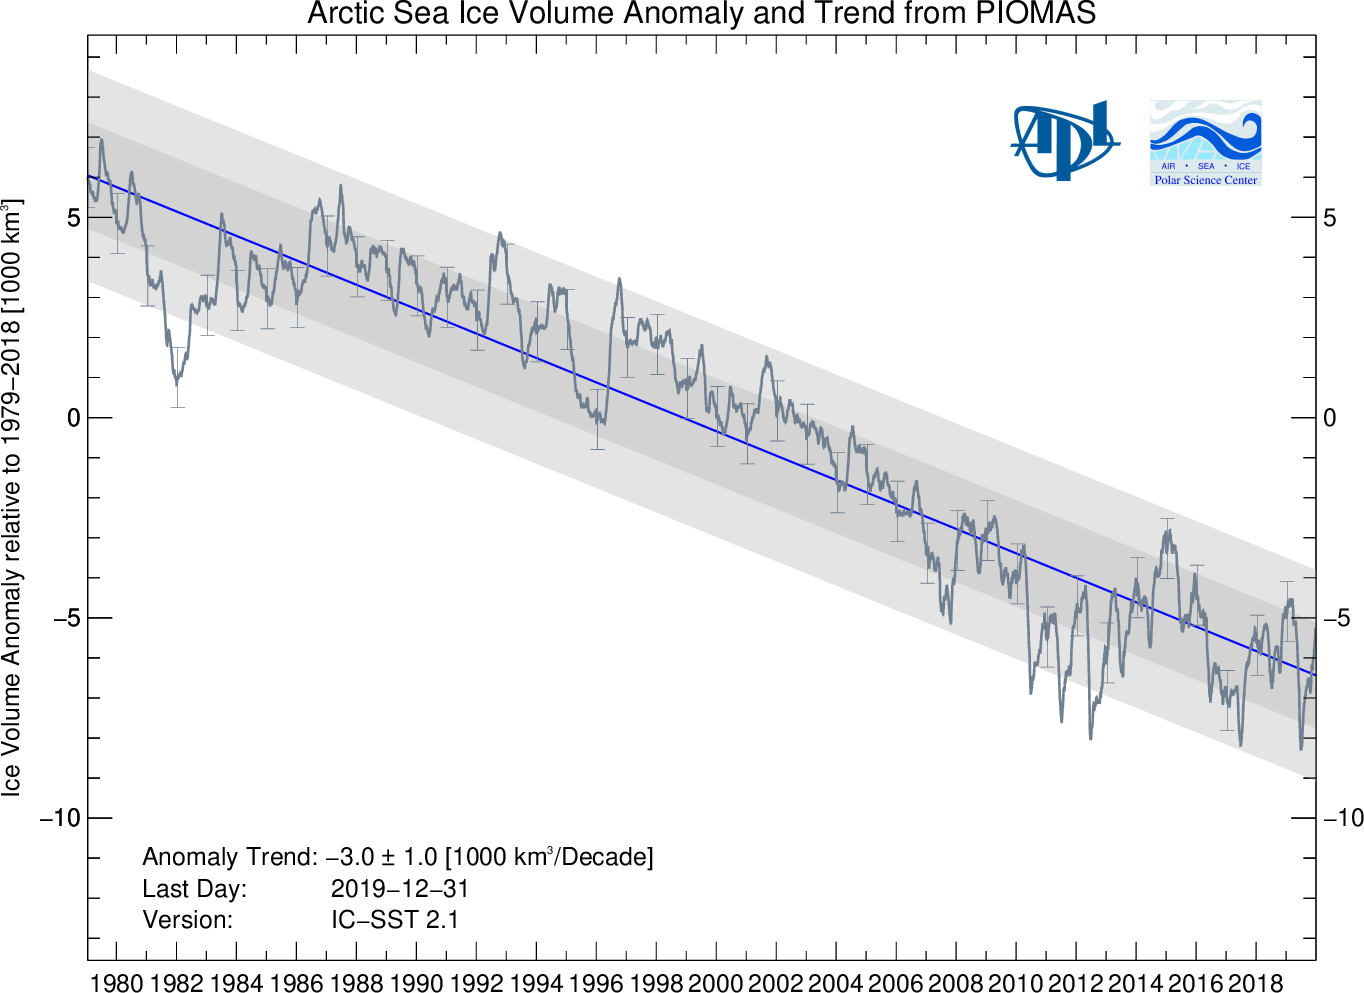 Arctic Sea Ice 1976-2019 Volume Anomaly Trend:  negative 3.1 (-1000 km2/Decade).